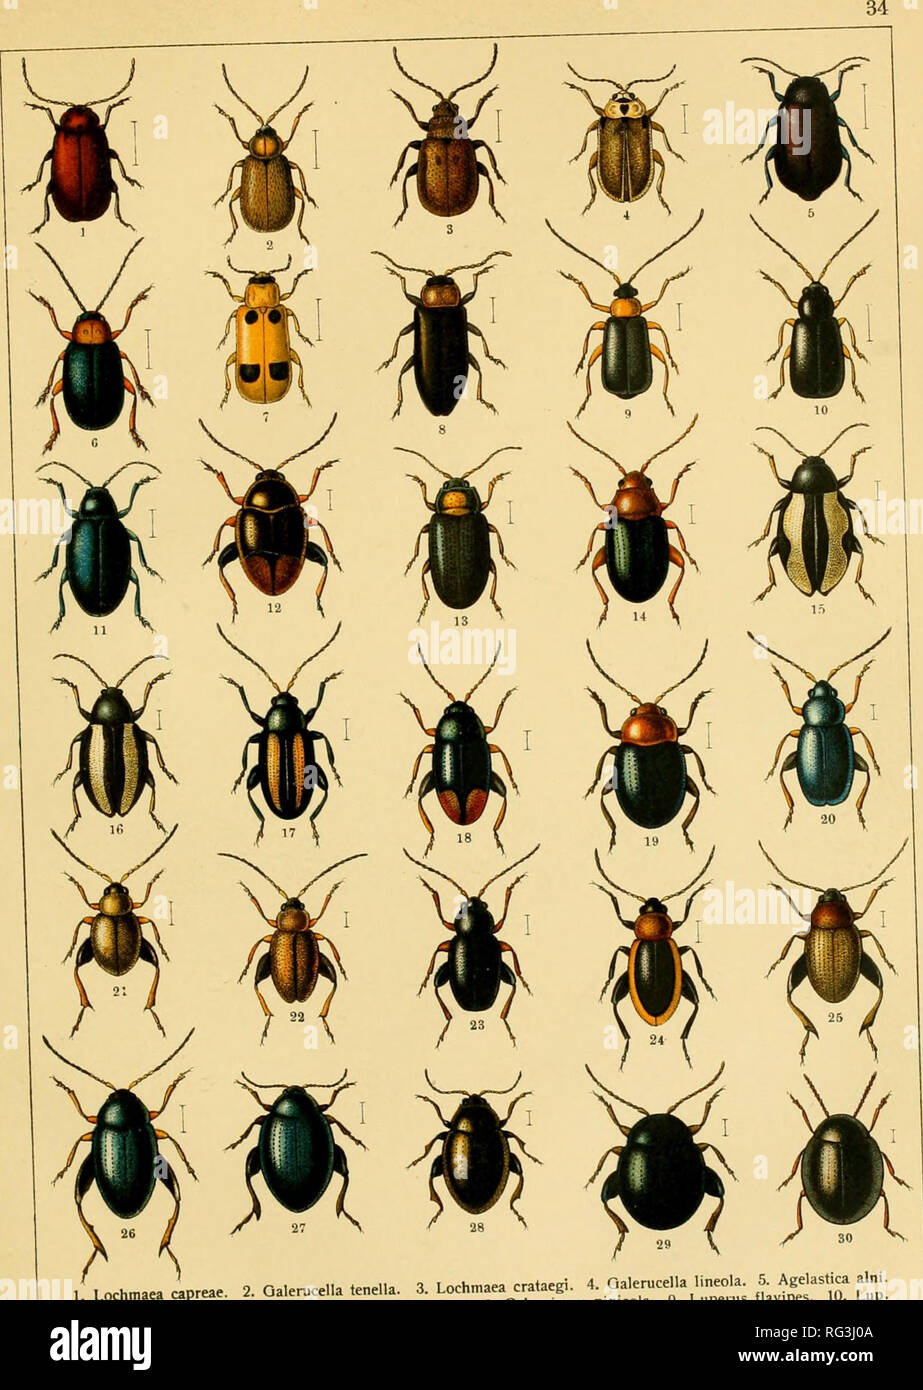 Calwers Käferbuch; einfürhrung in die kenntnis der käfer Europas. Beetles.  /tochmaea capreae. 2. Oalerucella tenella. 3. Lochmaea cra.aegi. *.  Galen&gt;c^la lineola 5^ Agdastica alni l: Sertyla Hal'nsls 7 Phy.lobrotica  quadrimacuja.a^ LTTS^l^ZZZrl^^'TO